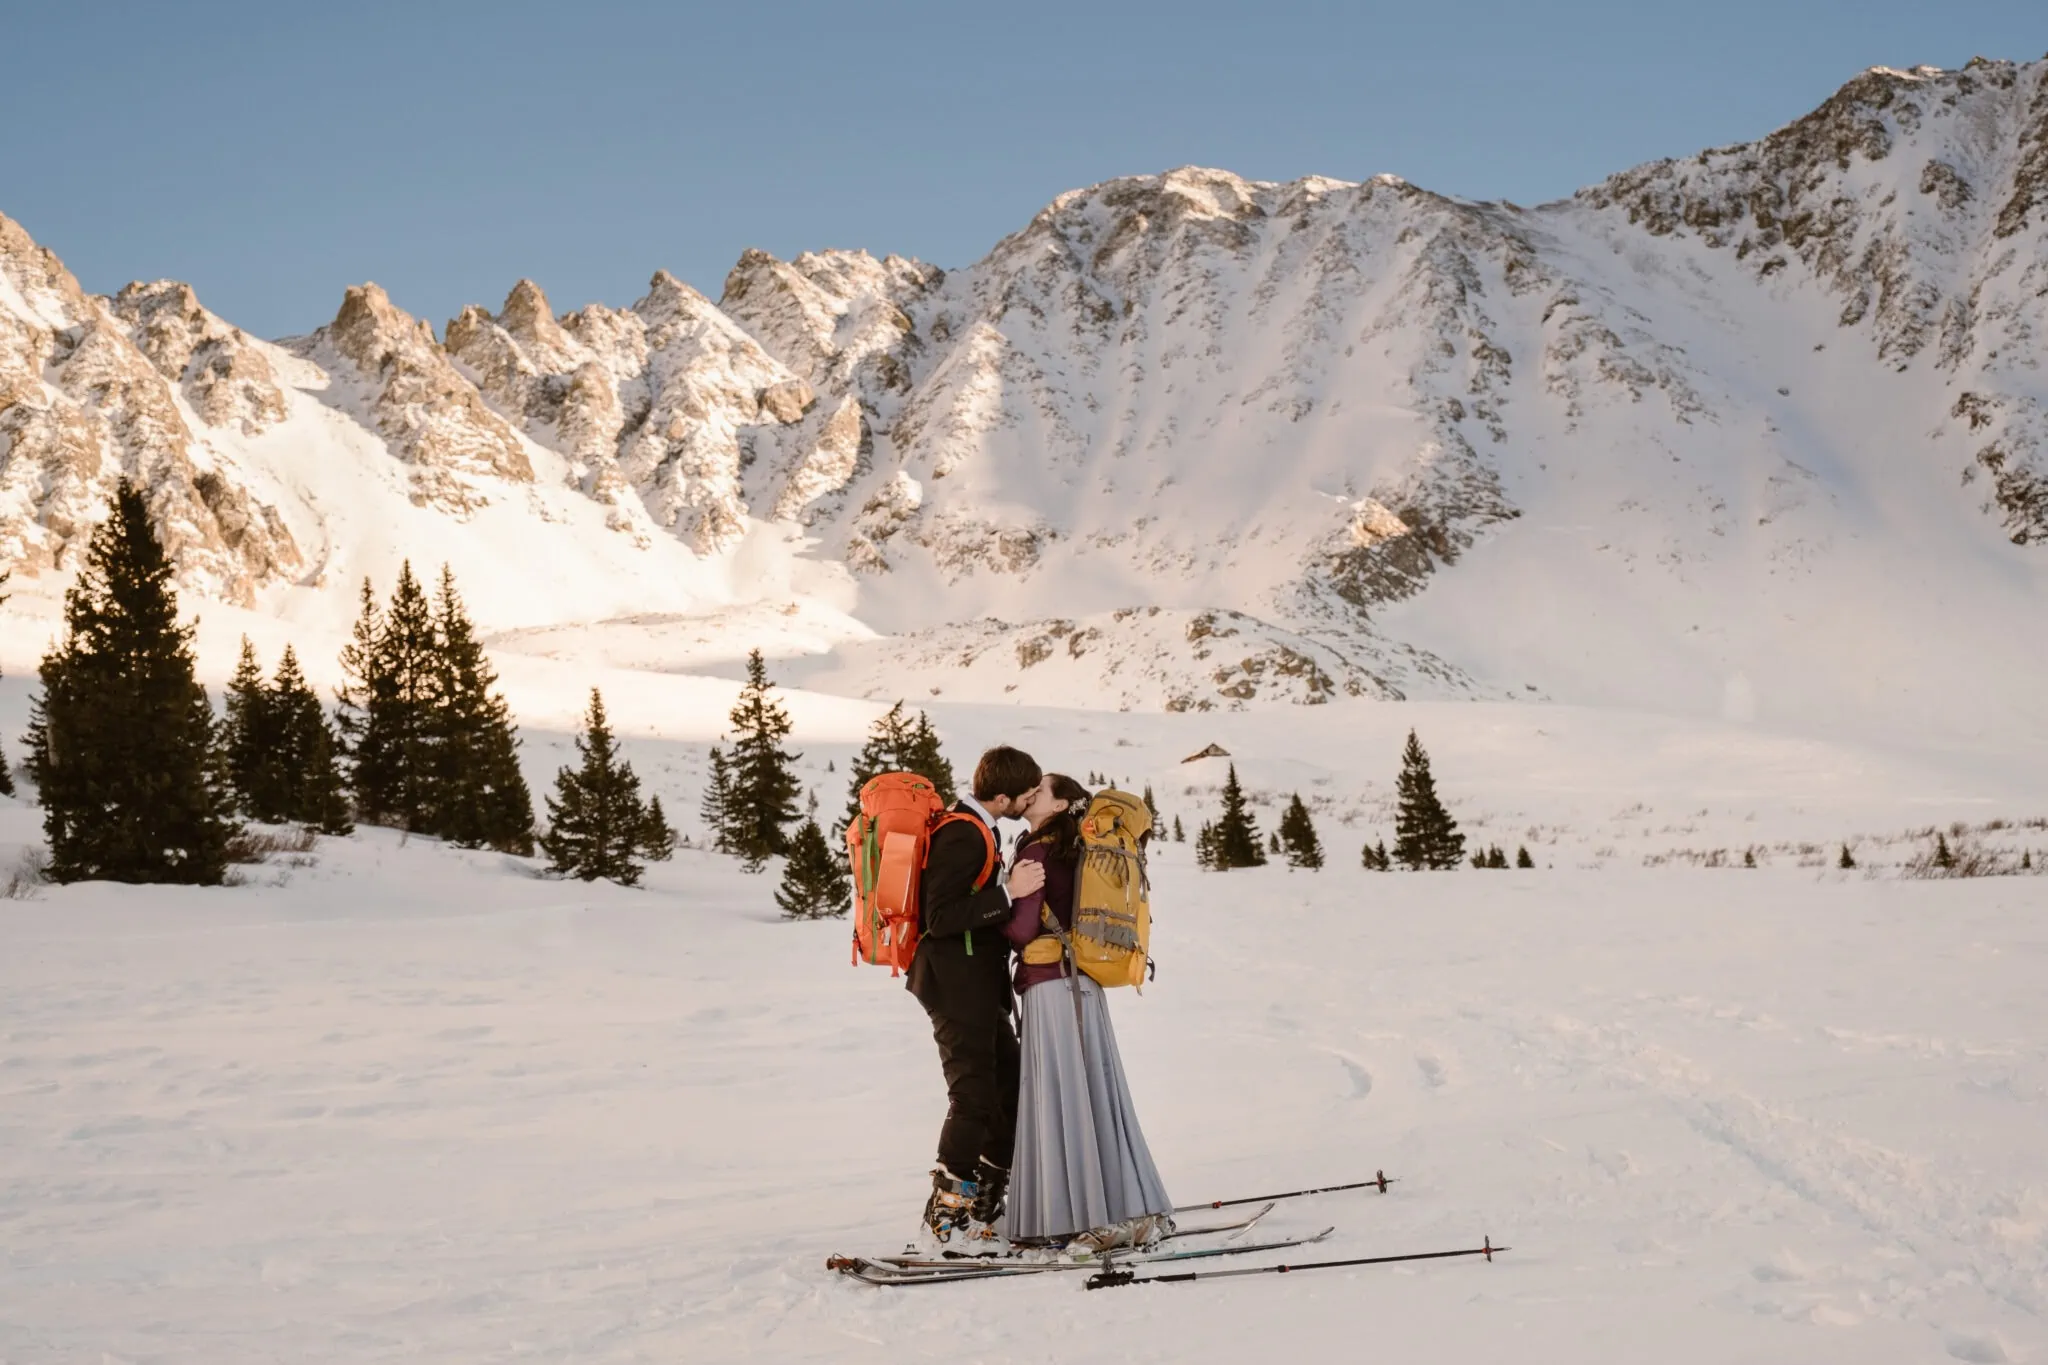 Backcountry skiing elopement in Colorado